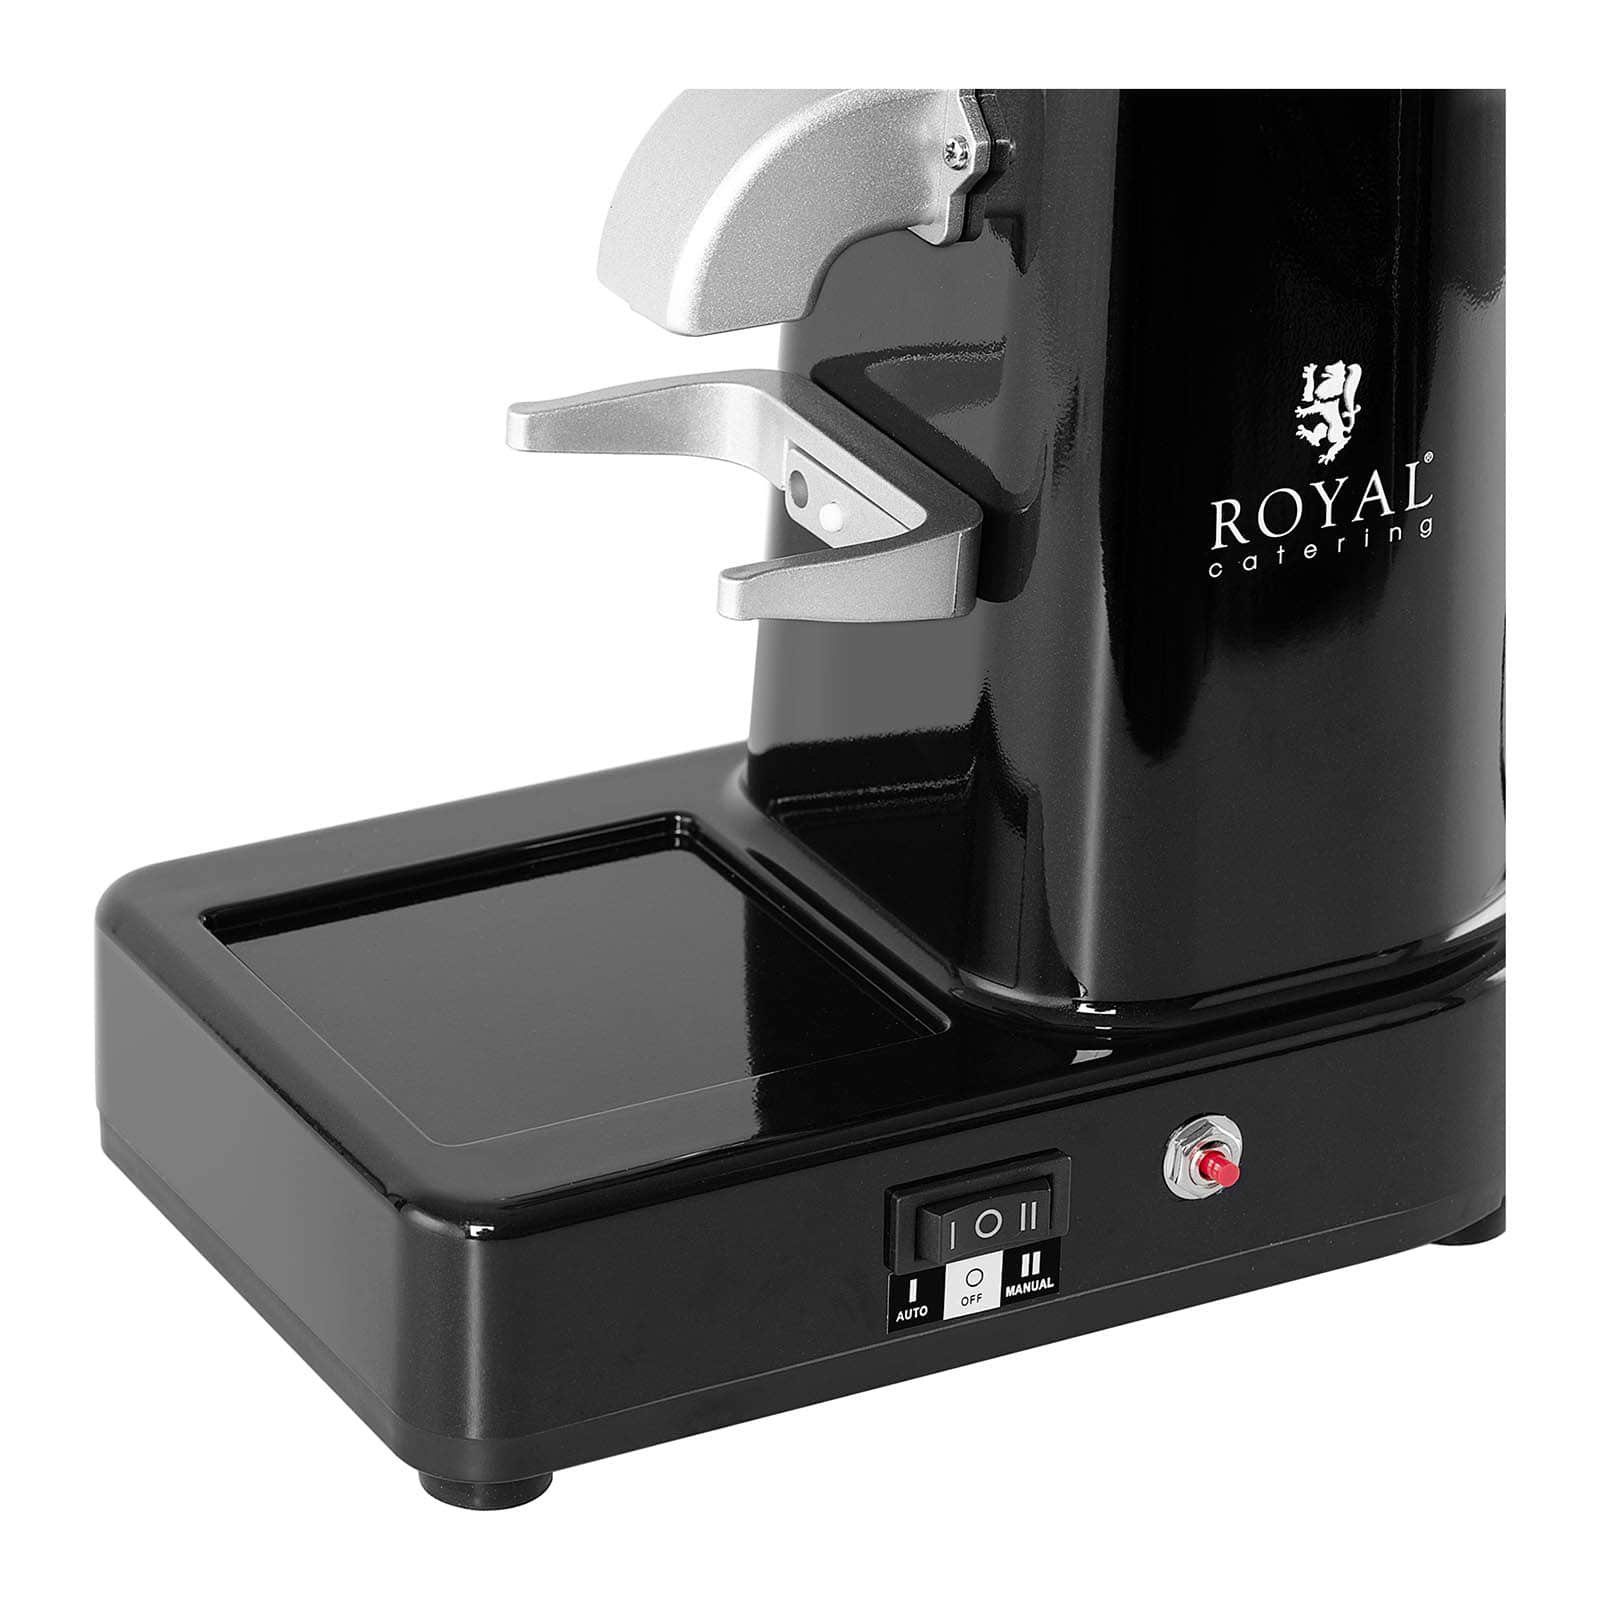 Royal Catering Mahl Maschine Kaffee Kaffeemühle W 200 200 elektrisch W 1000 ml Kaffeemühle Kunststoff